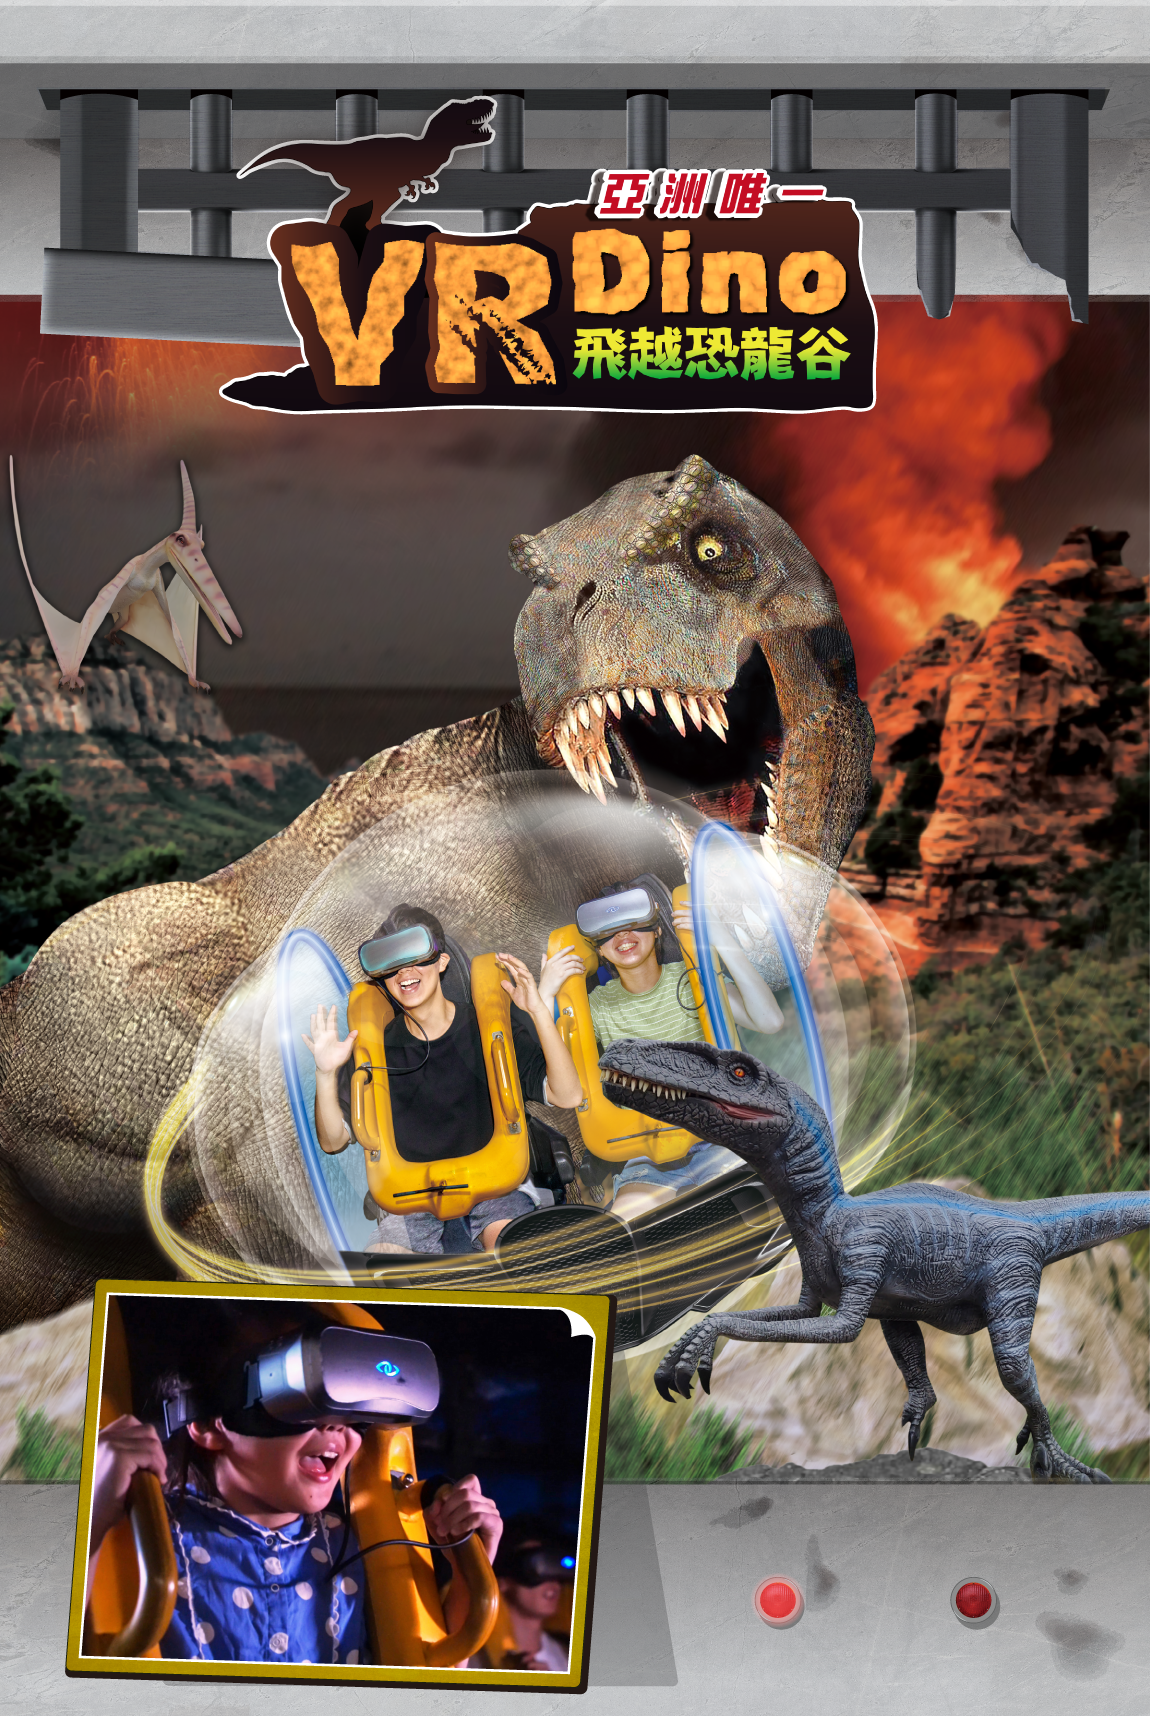 VR Dino 飛越恐龍谷